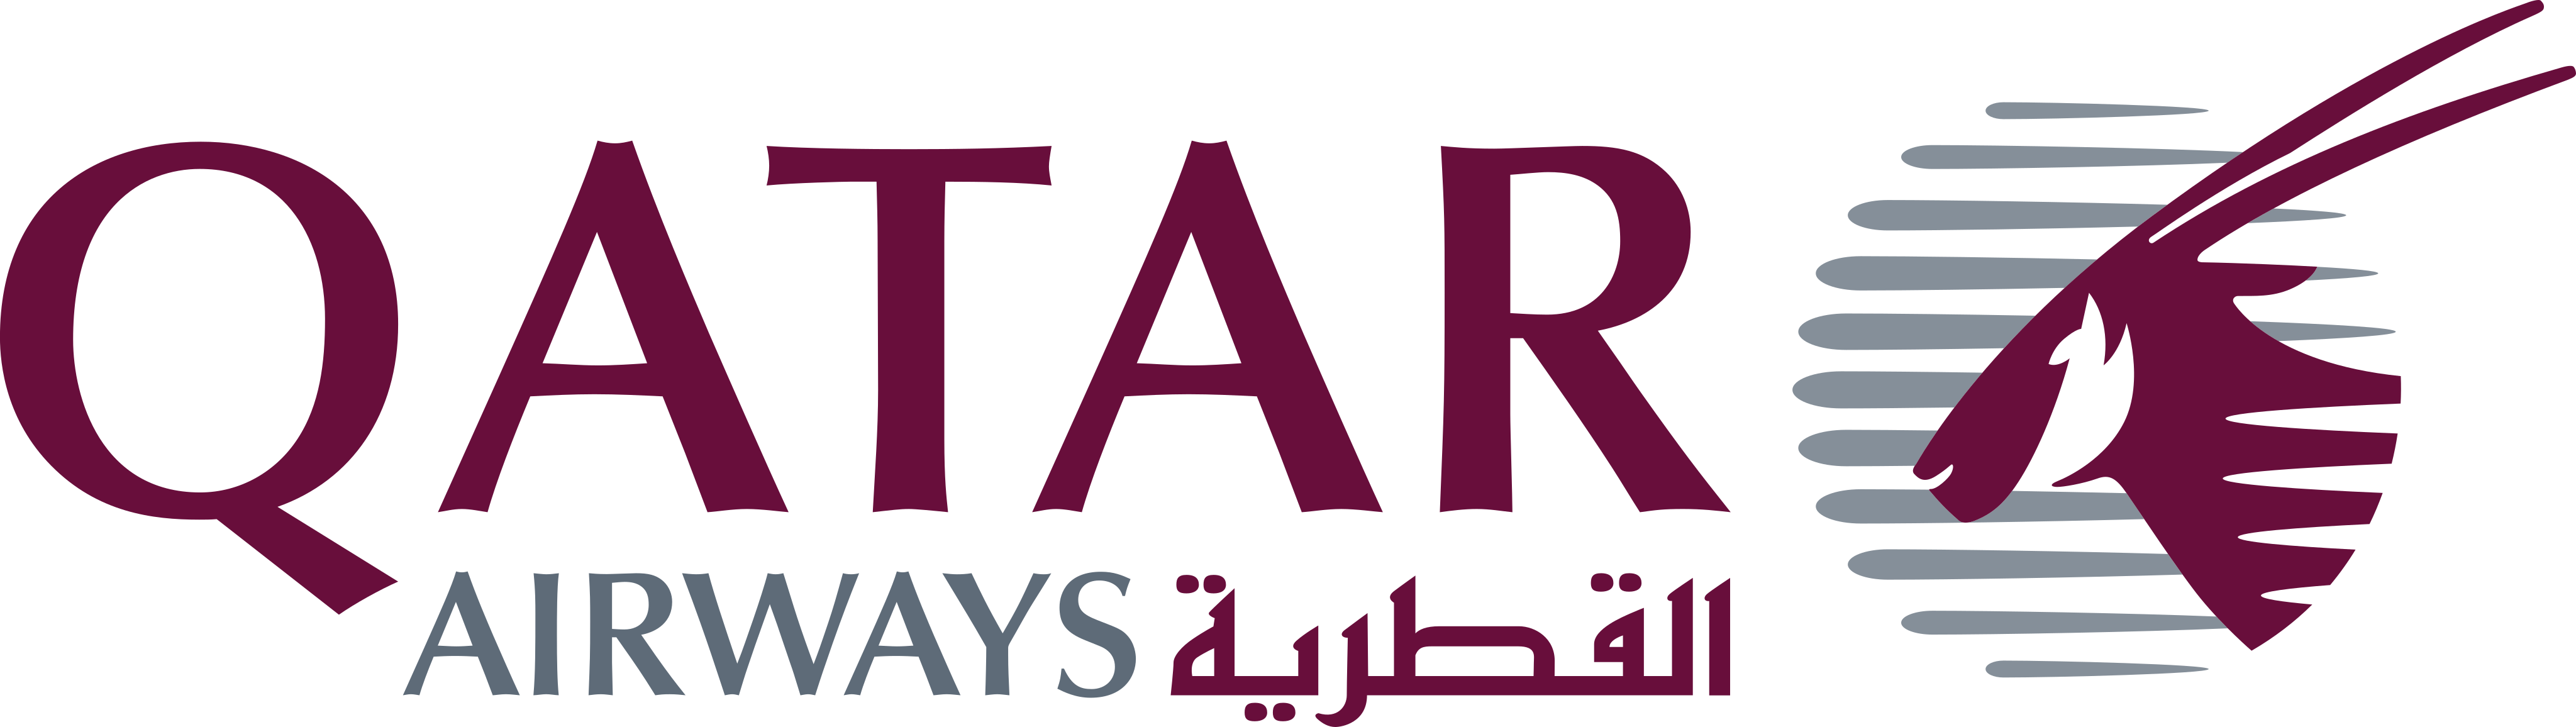 qatar-airways-logo-1